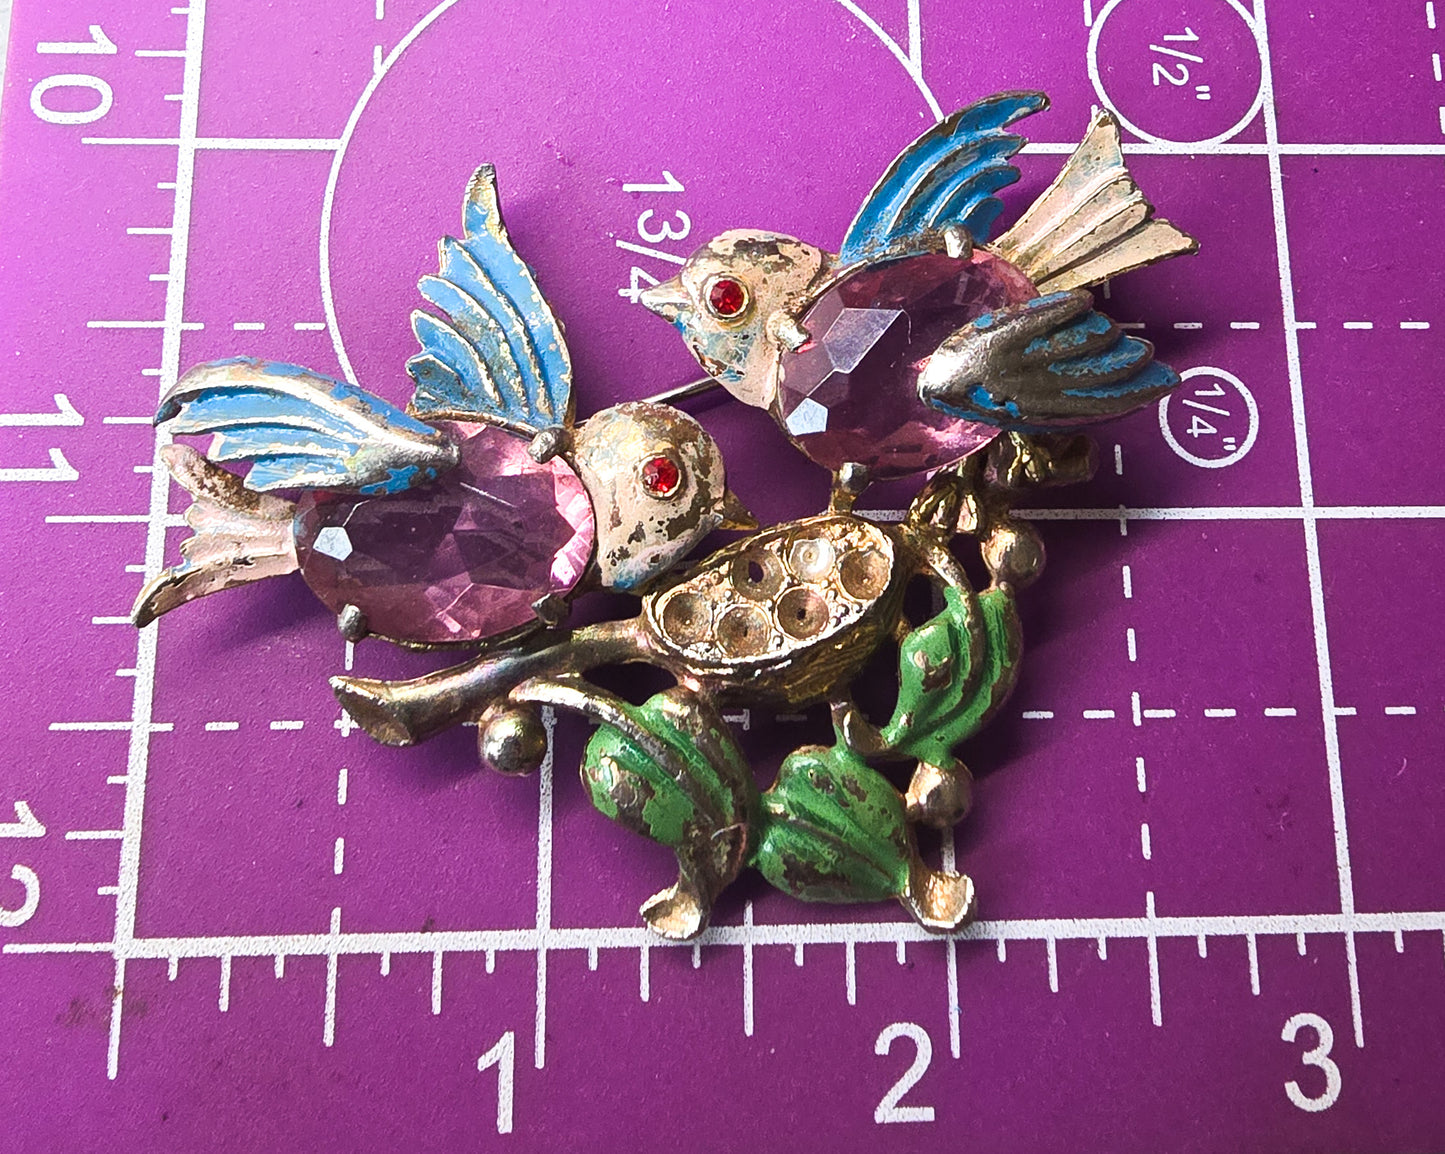 Fred Gray Corp Double bird enamel paste antique Art Deco brooch for repair RARE USA